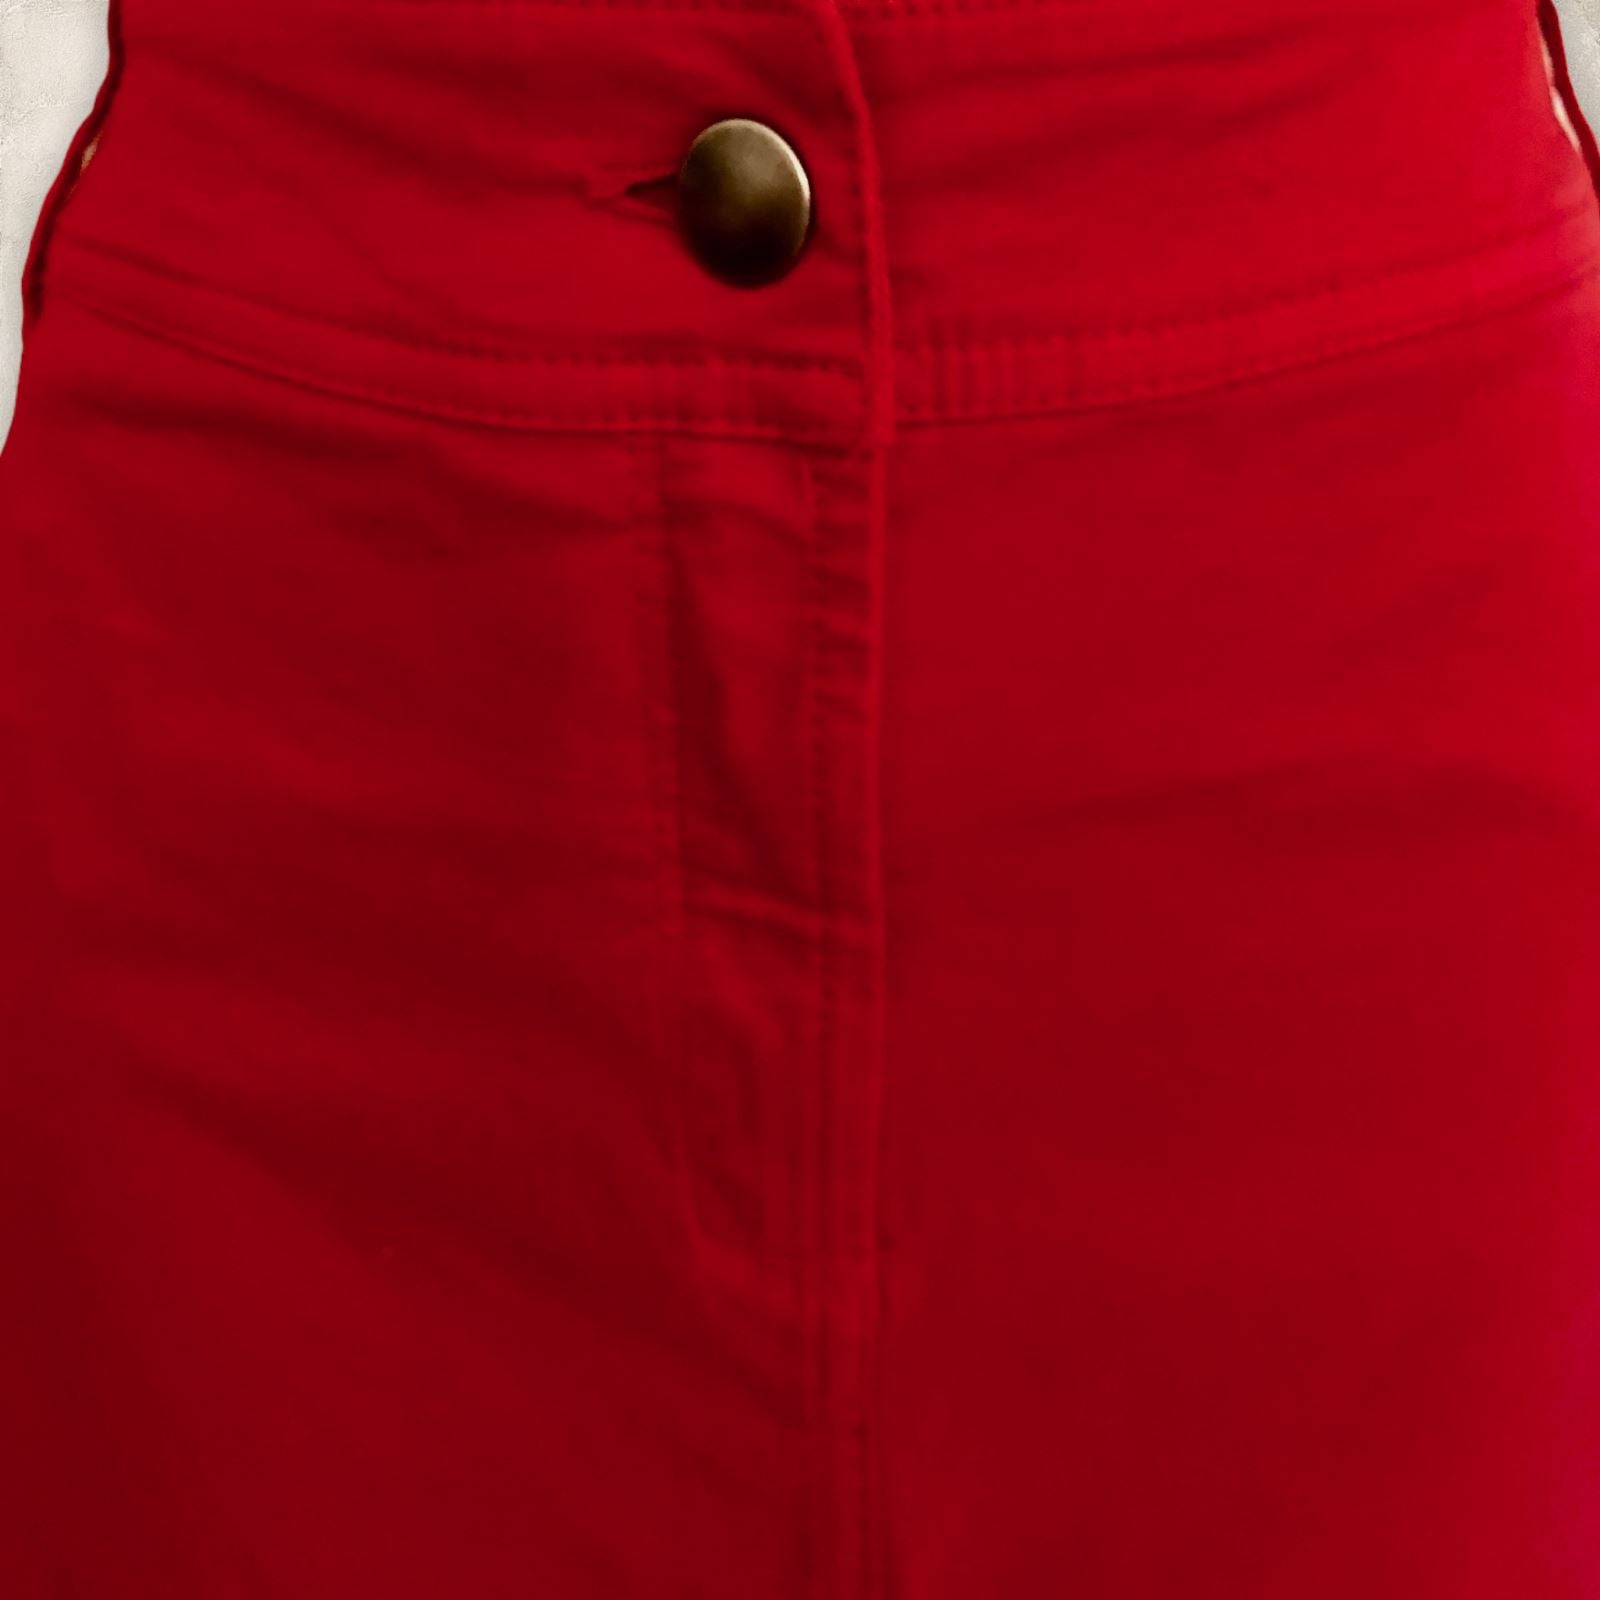 Pomodoro Women's Red Cotton Pencil Skirt UK 16 US 12 EU 44 Timeless Fashions